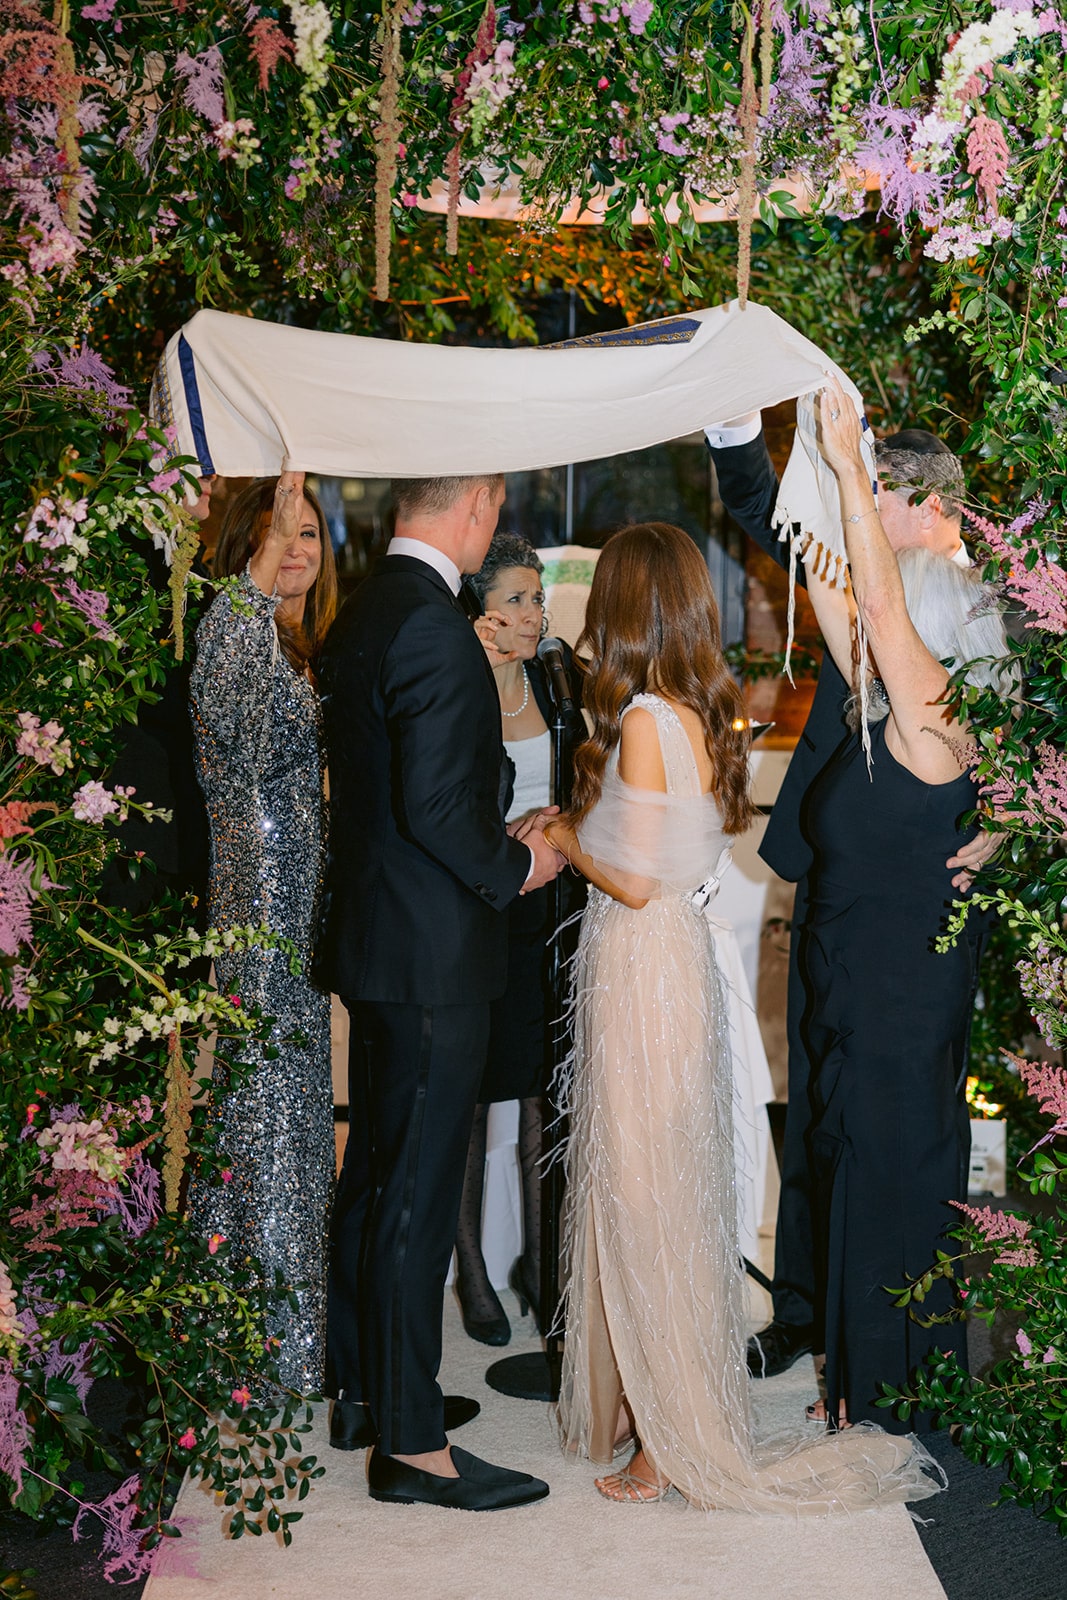 Jewish wedding at Tribeca Rooftop - Larisa Shorina Photography - Elegant luxury weddings in New York, Italy, Destinations